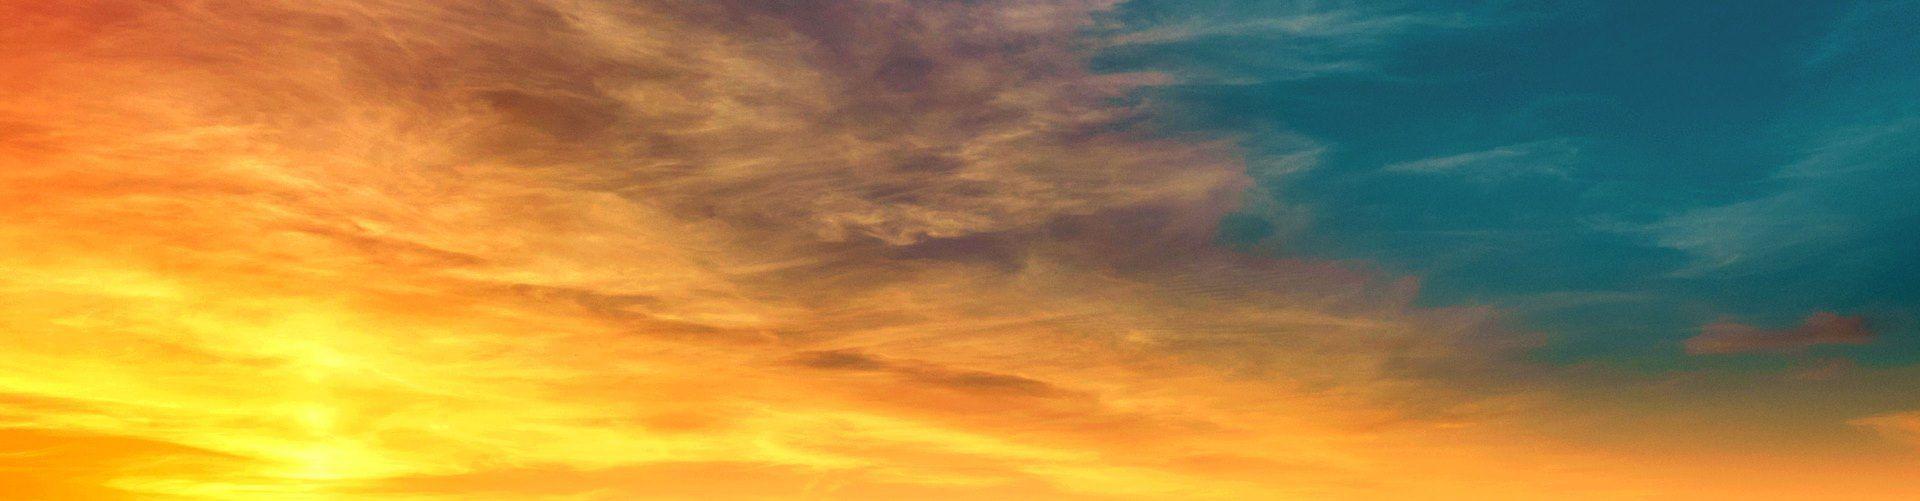 Clouds At Sunrise Christian Worship Background_4KBACK